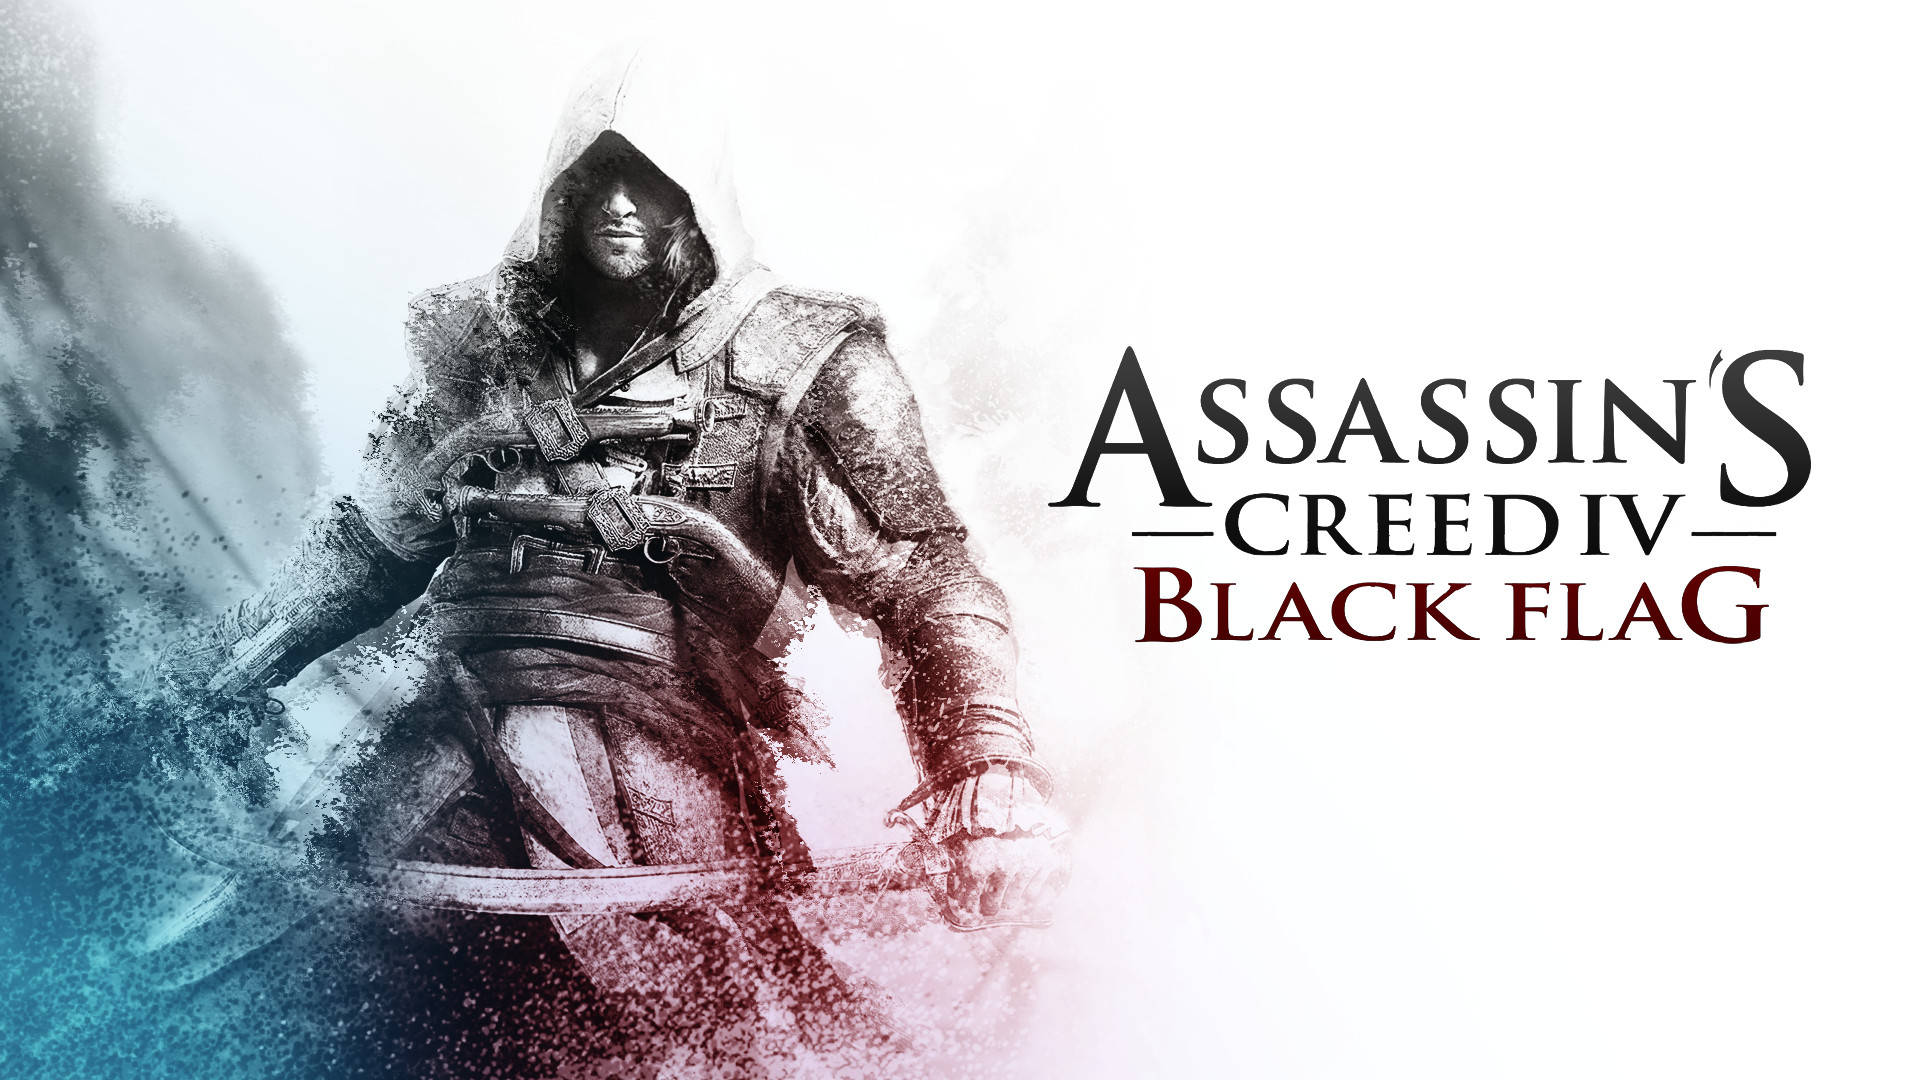 Free Assassin's Creed Black Flag Wallpaper Downloads, [100+] Assassin's  Creed Black Flag Wallpapers for FREE 